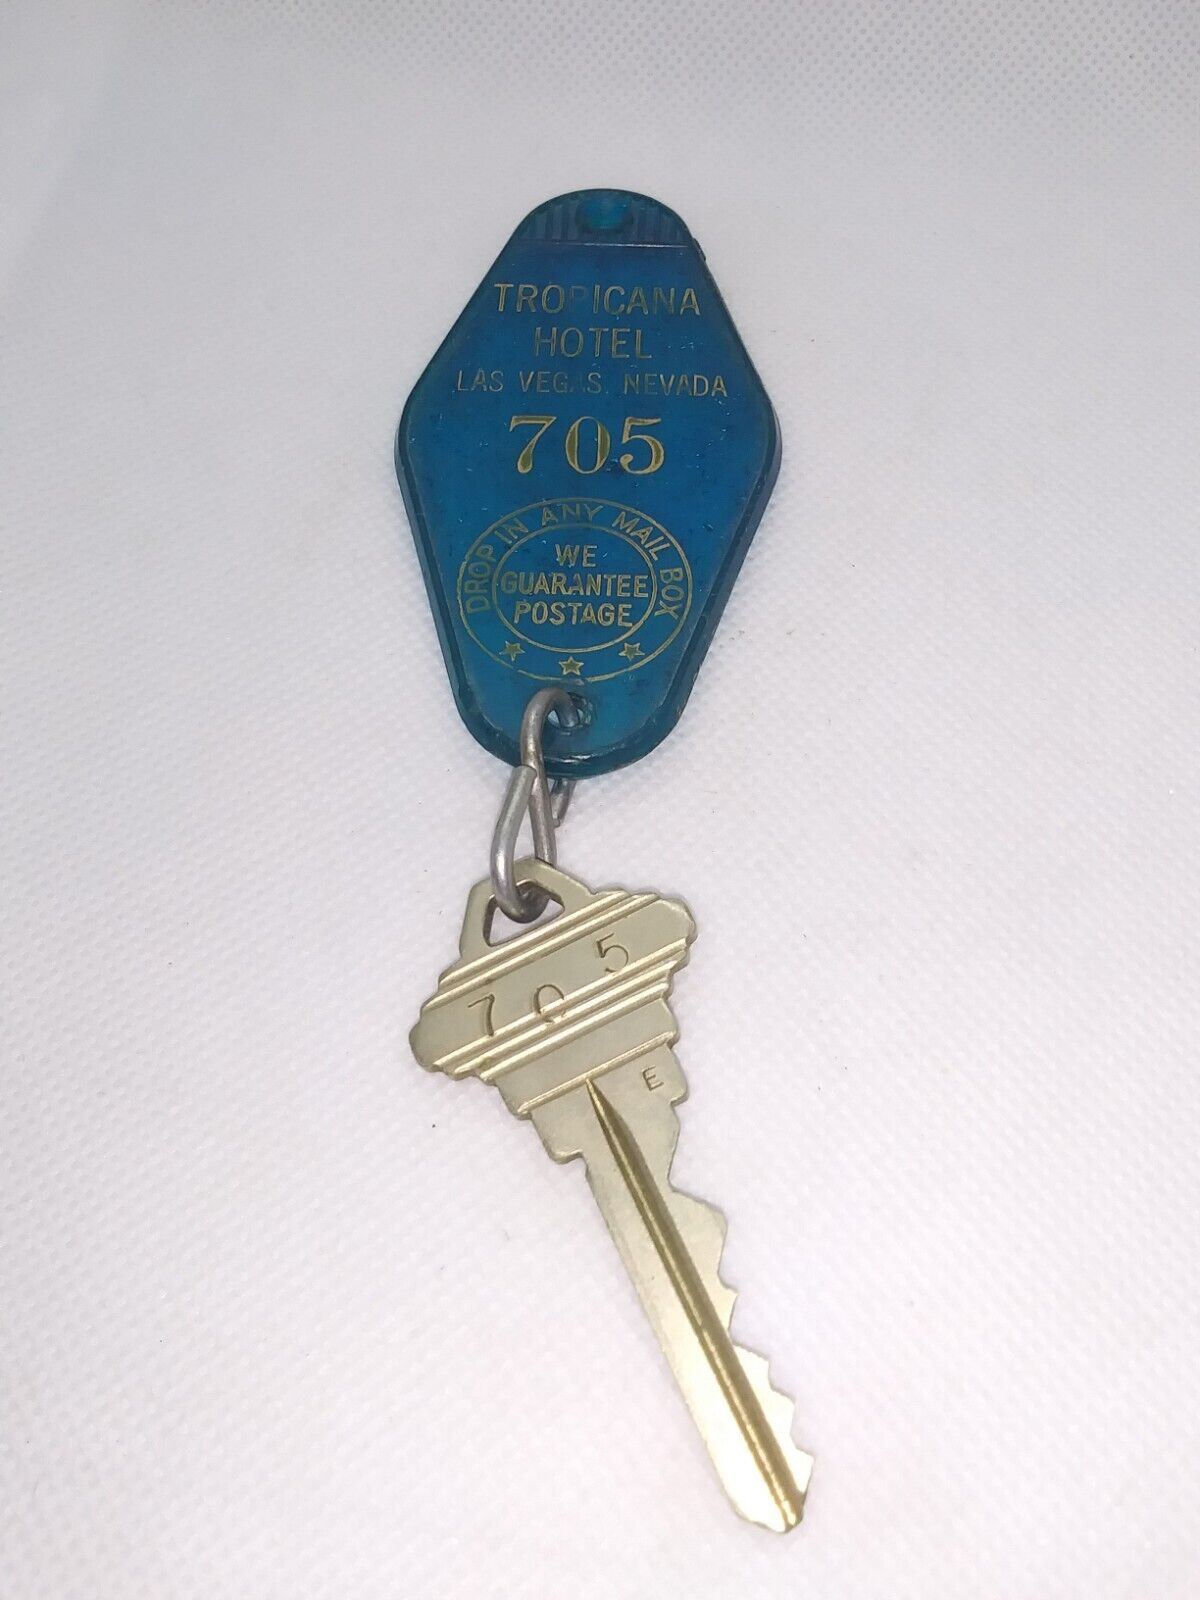 Vintage Tropicana Hotel Las Vegas Nevada Keychain #705 With Key